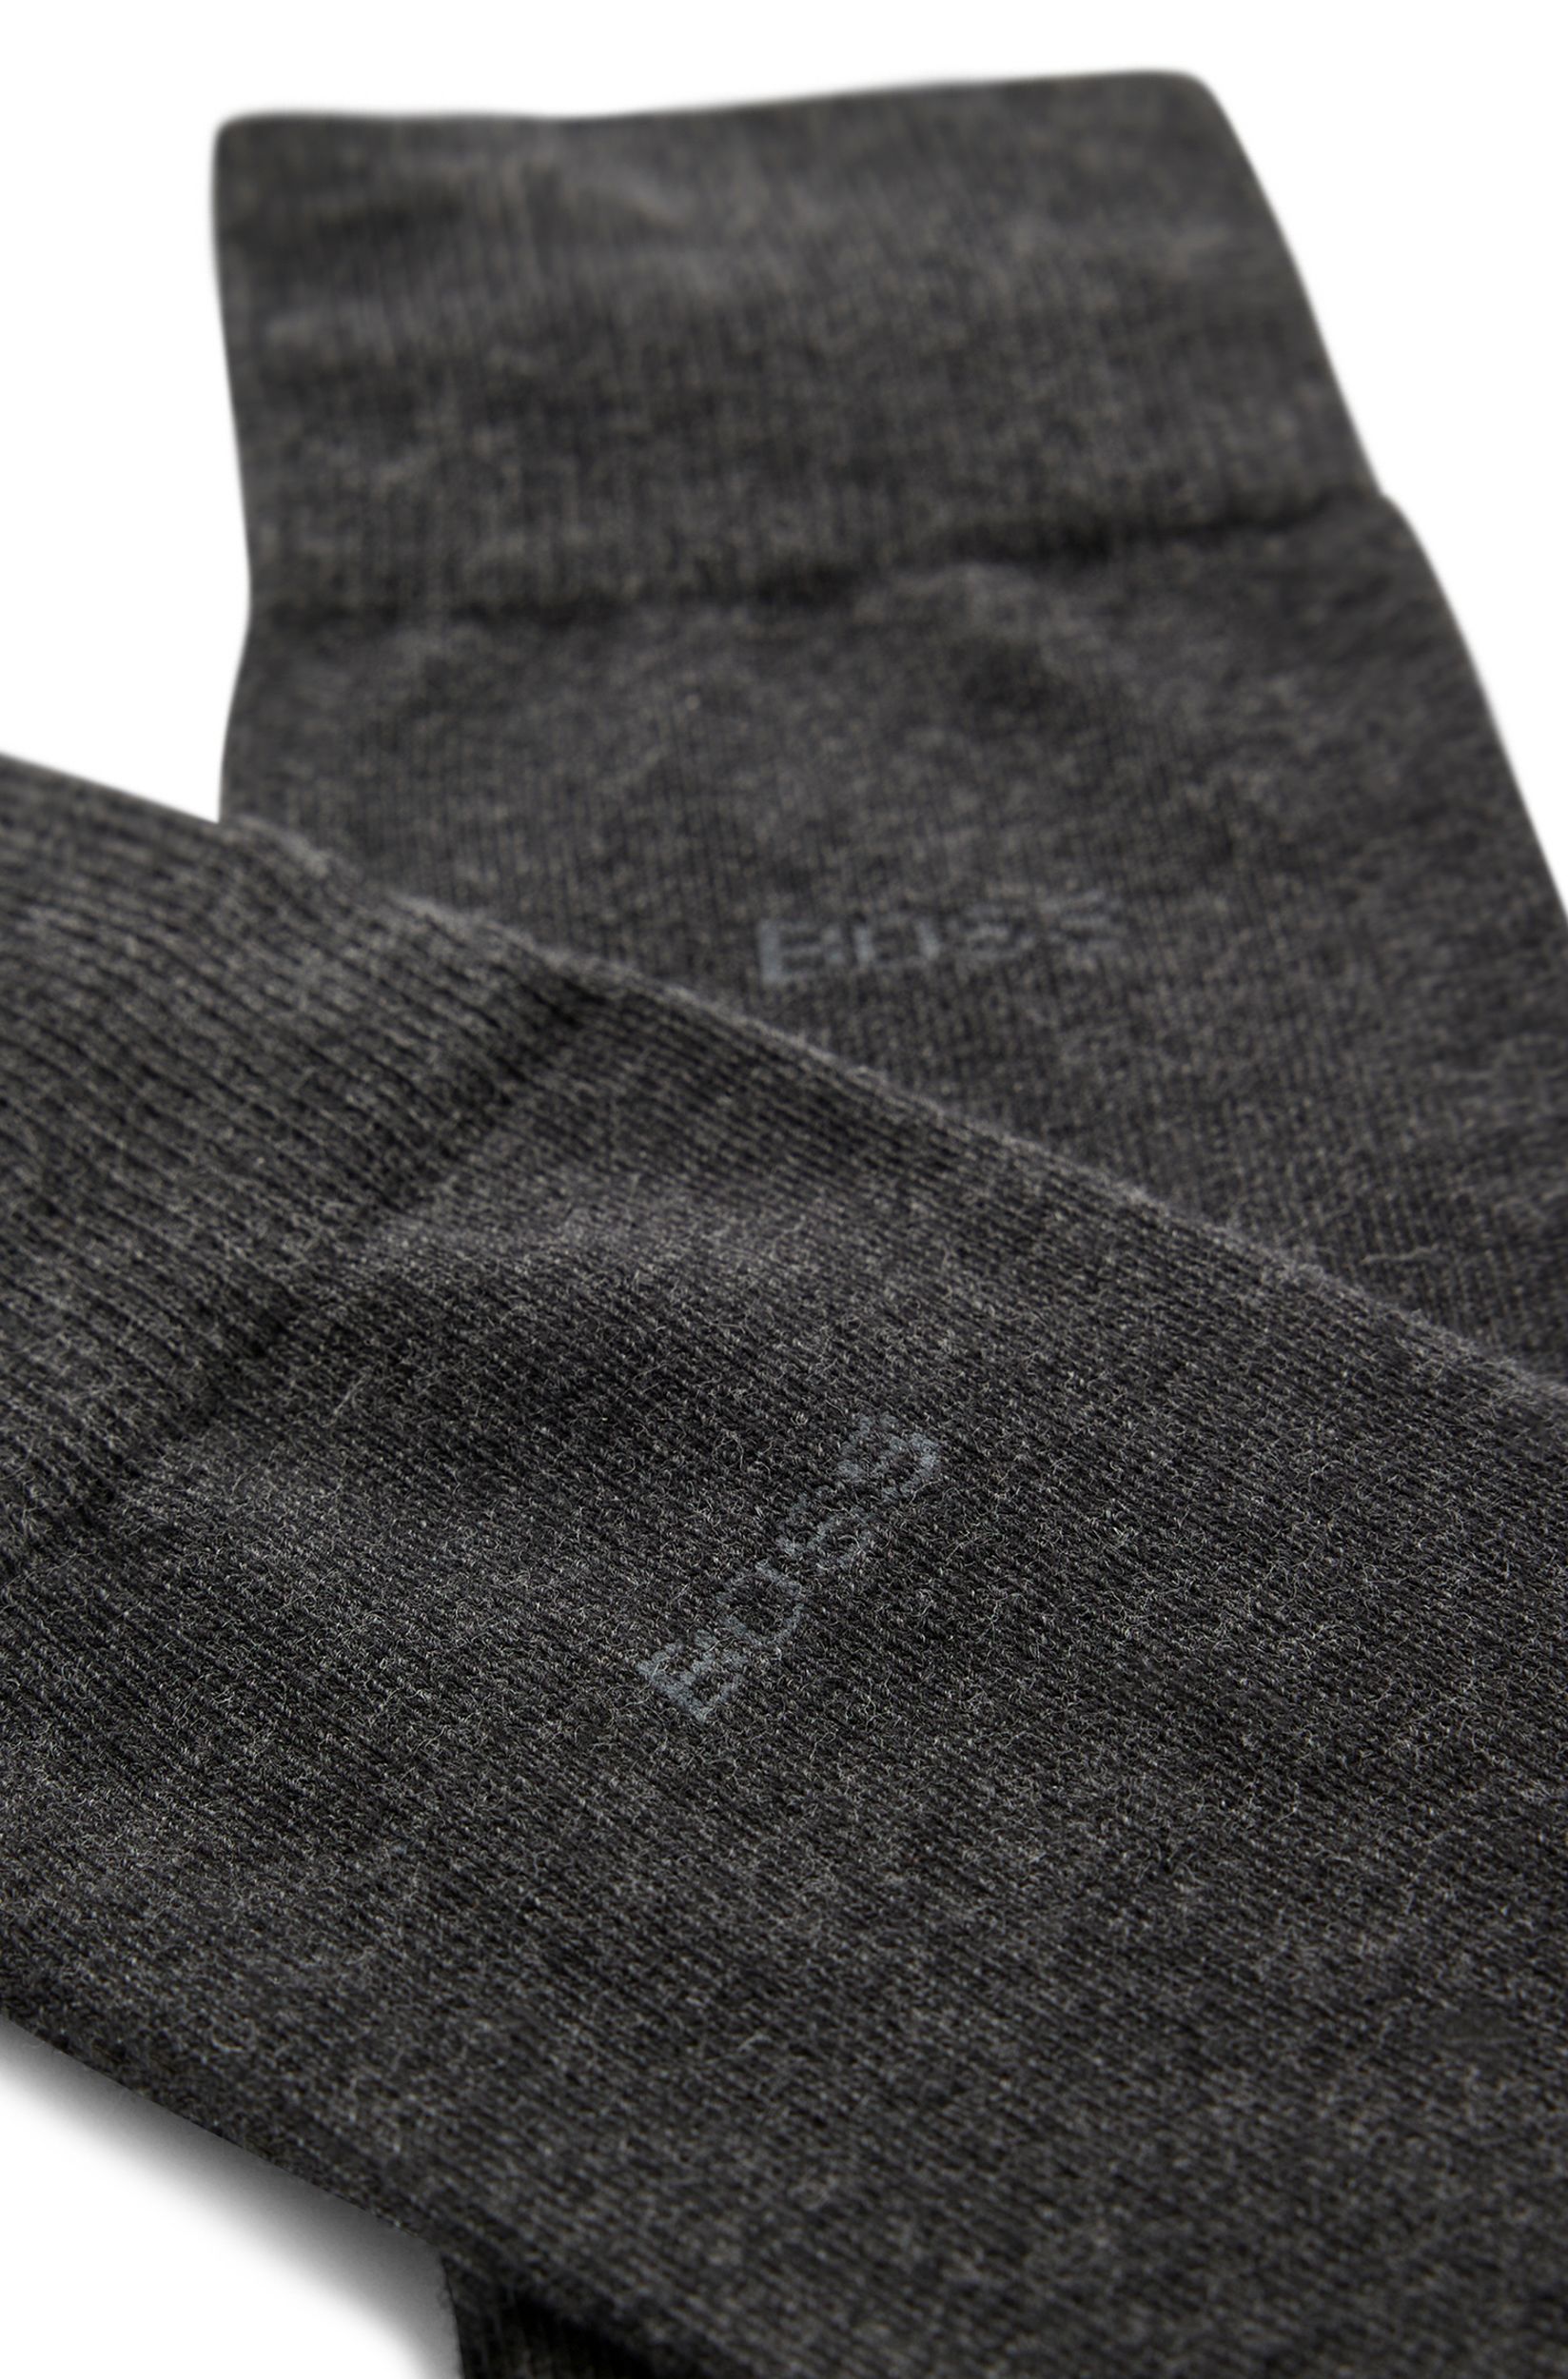 Hugo Boss Menswear Sokken Antraciet 082263-002-3942